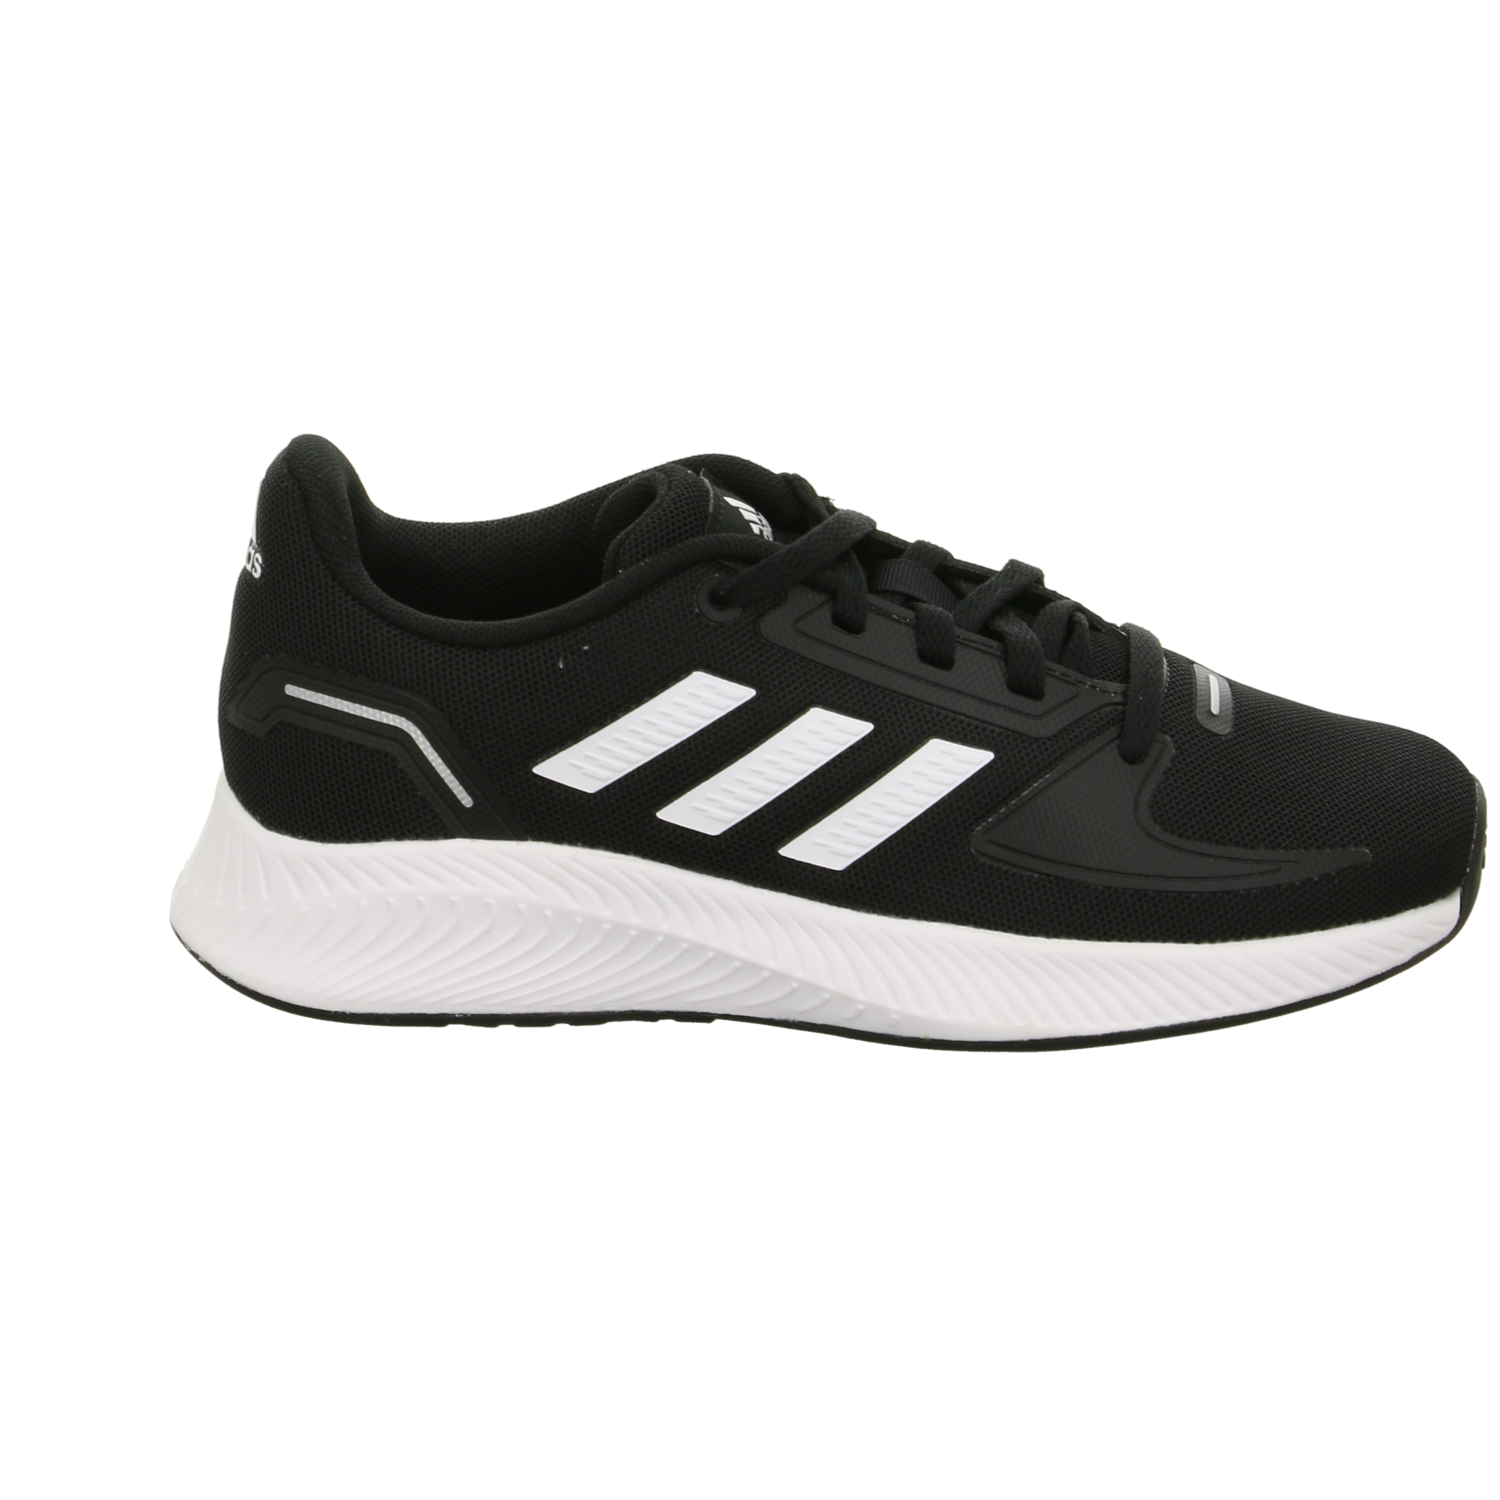 Adidas Sneaker K schwarz